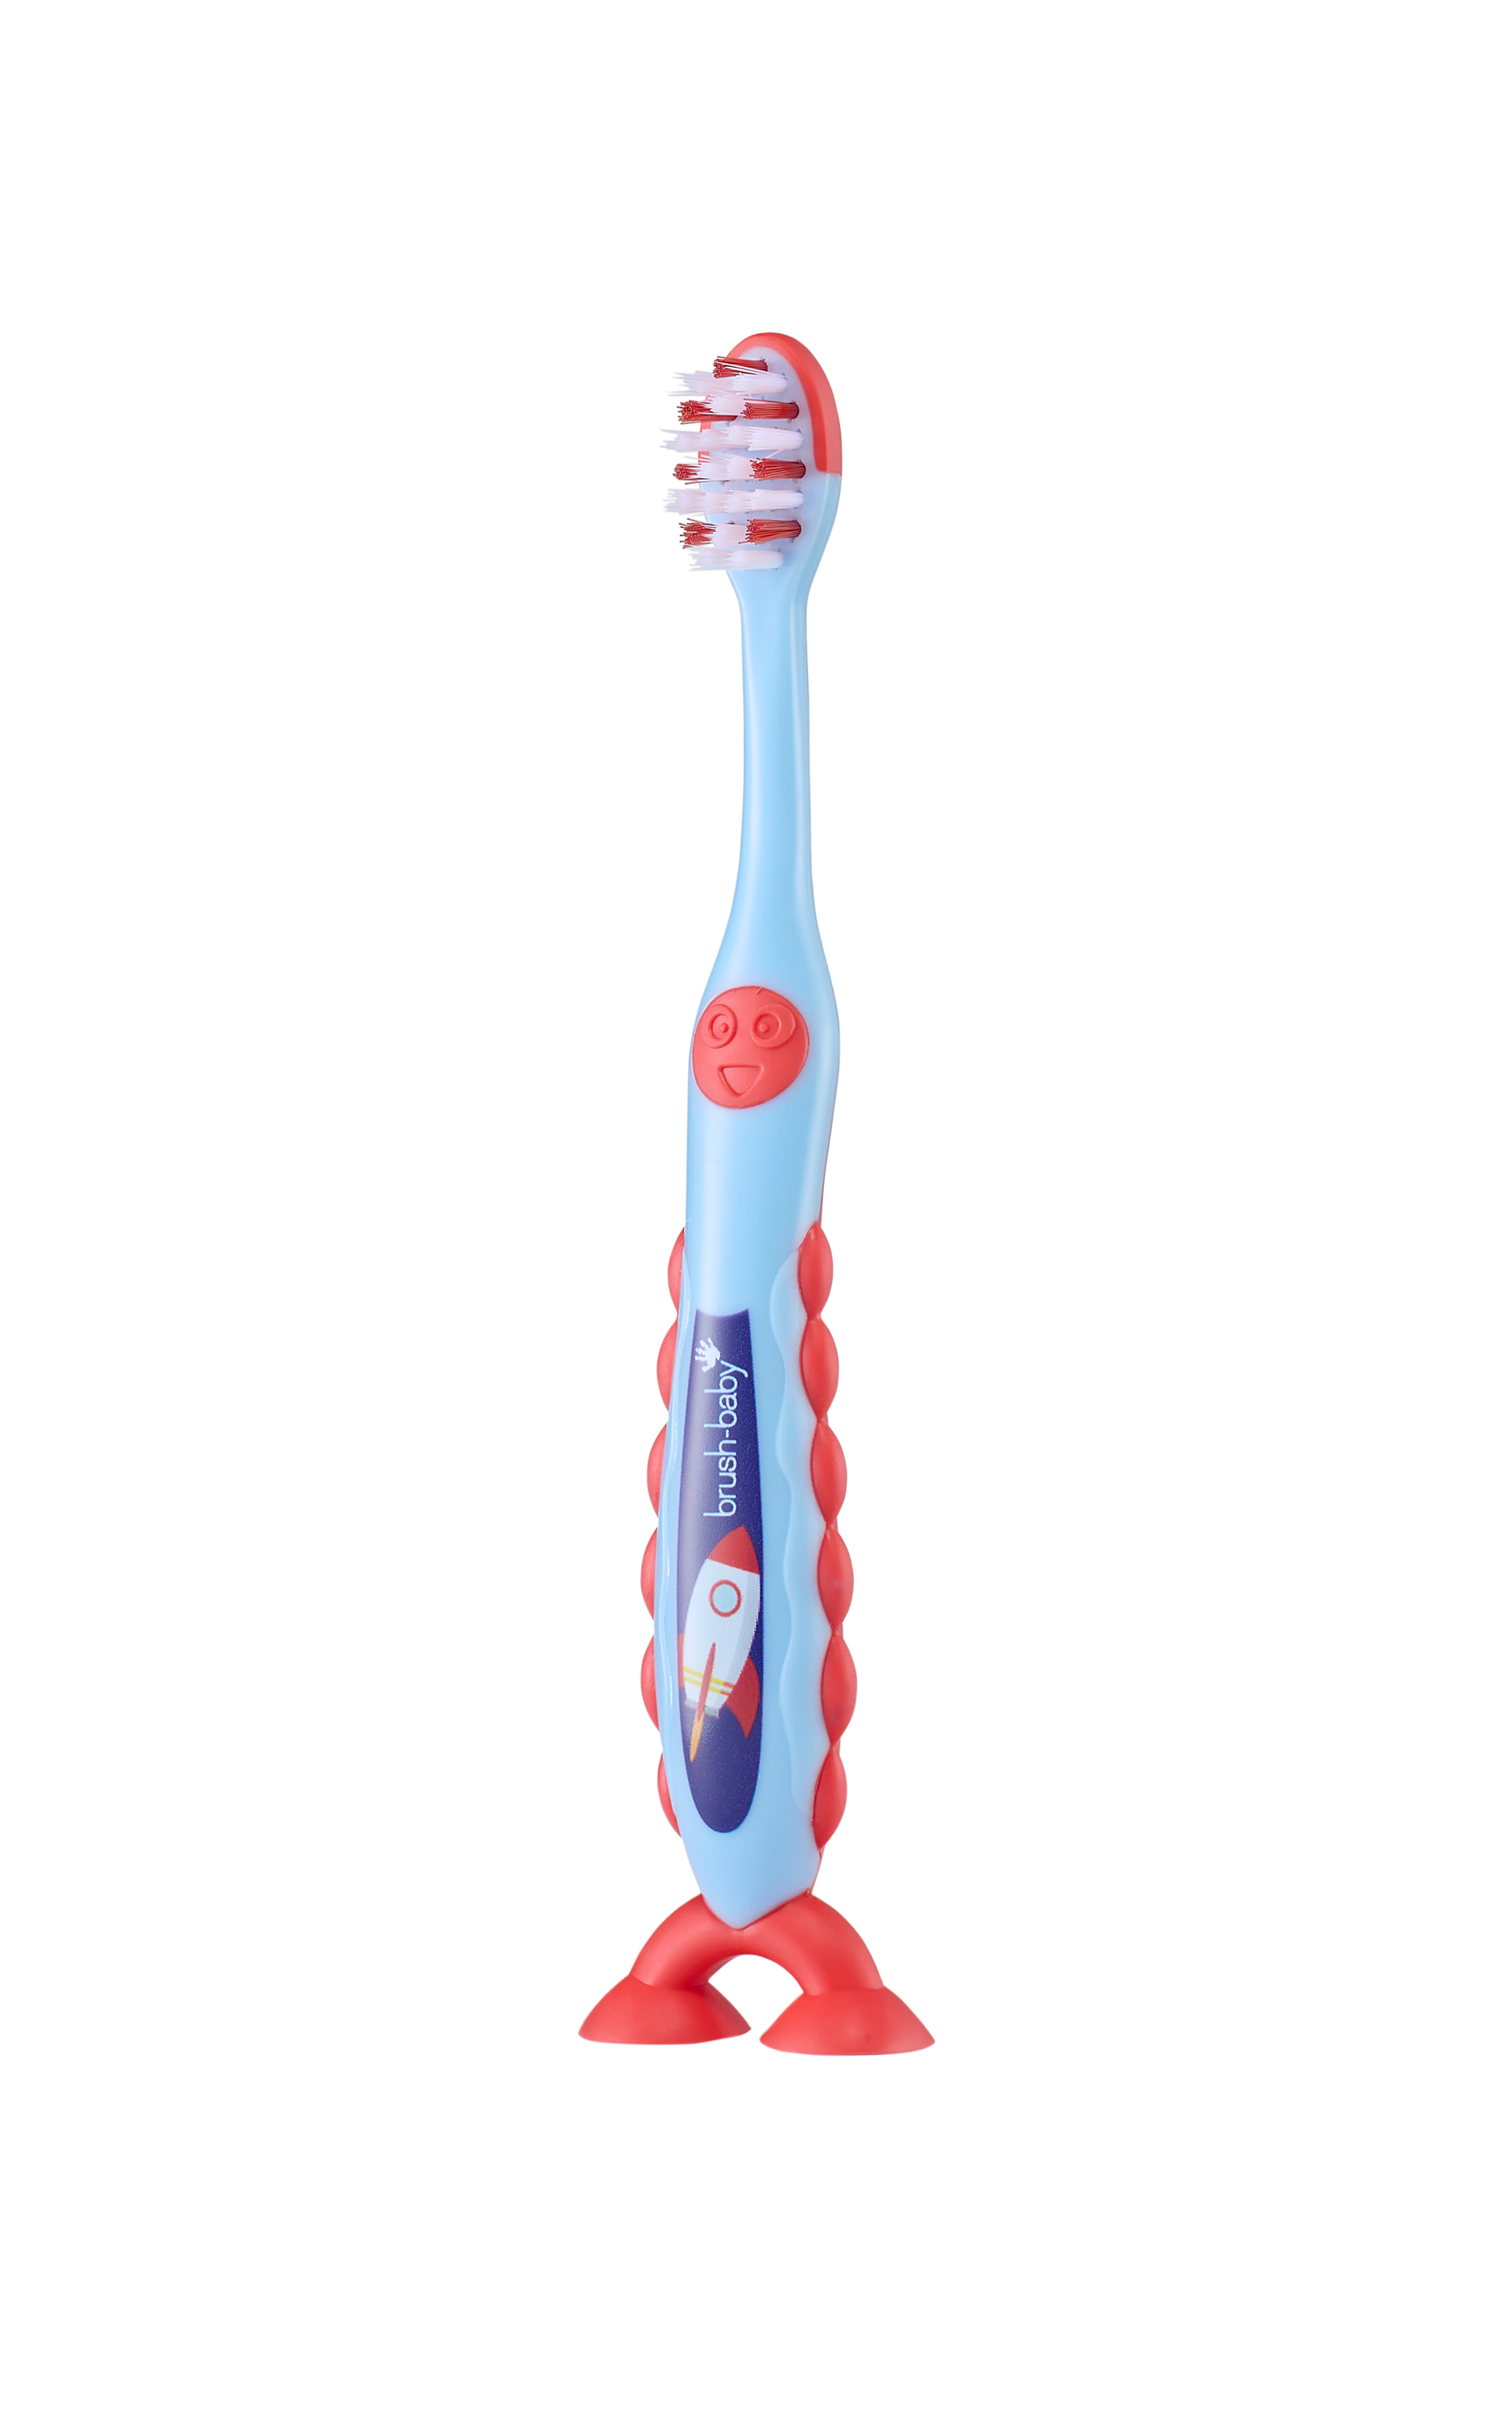 Brush-Baby FlossBrush NEW зубная щётка, 3-6 лет, ракета | фото